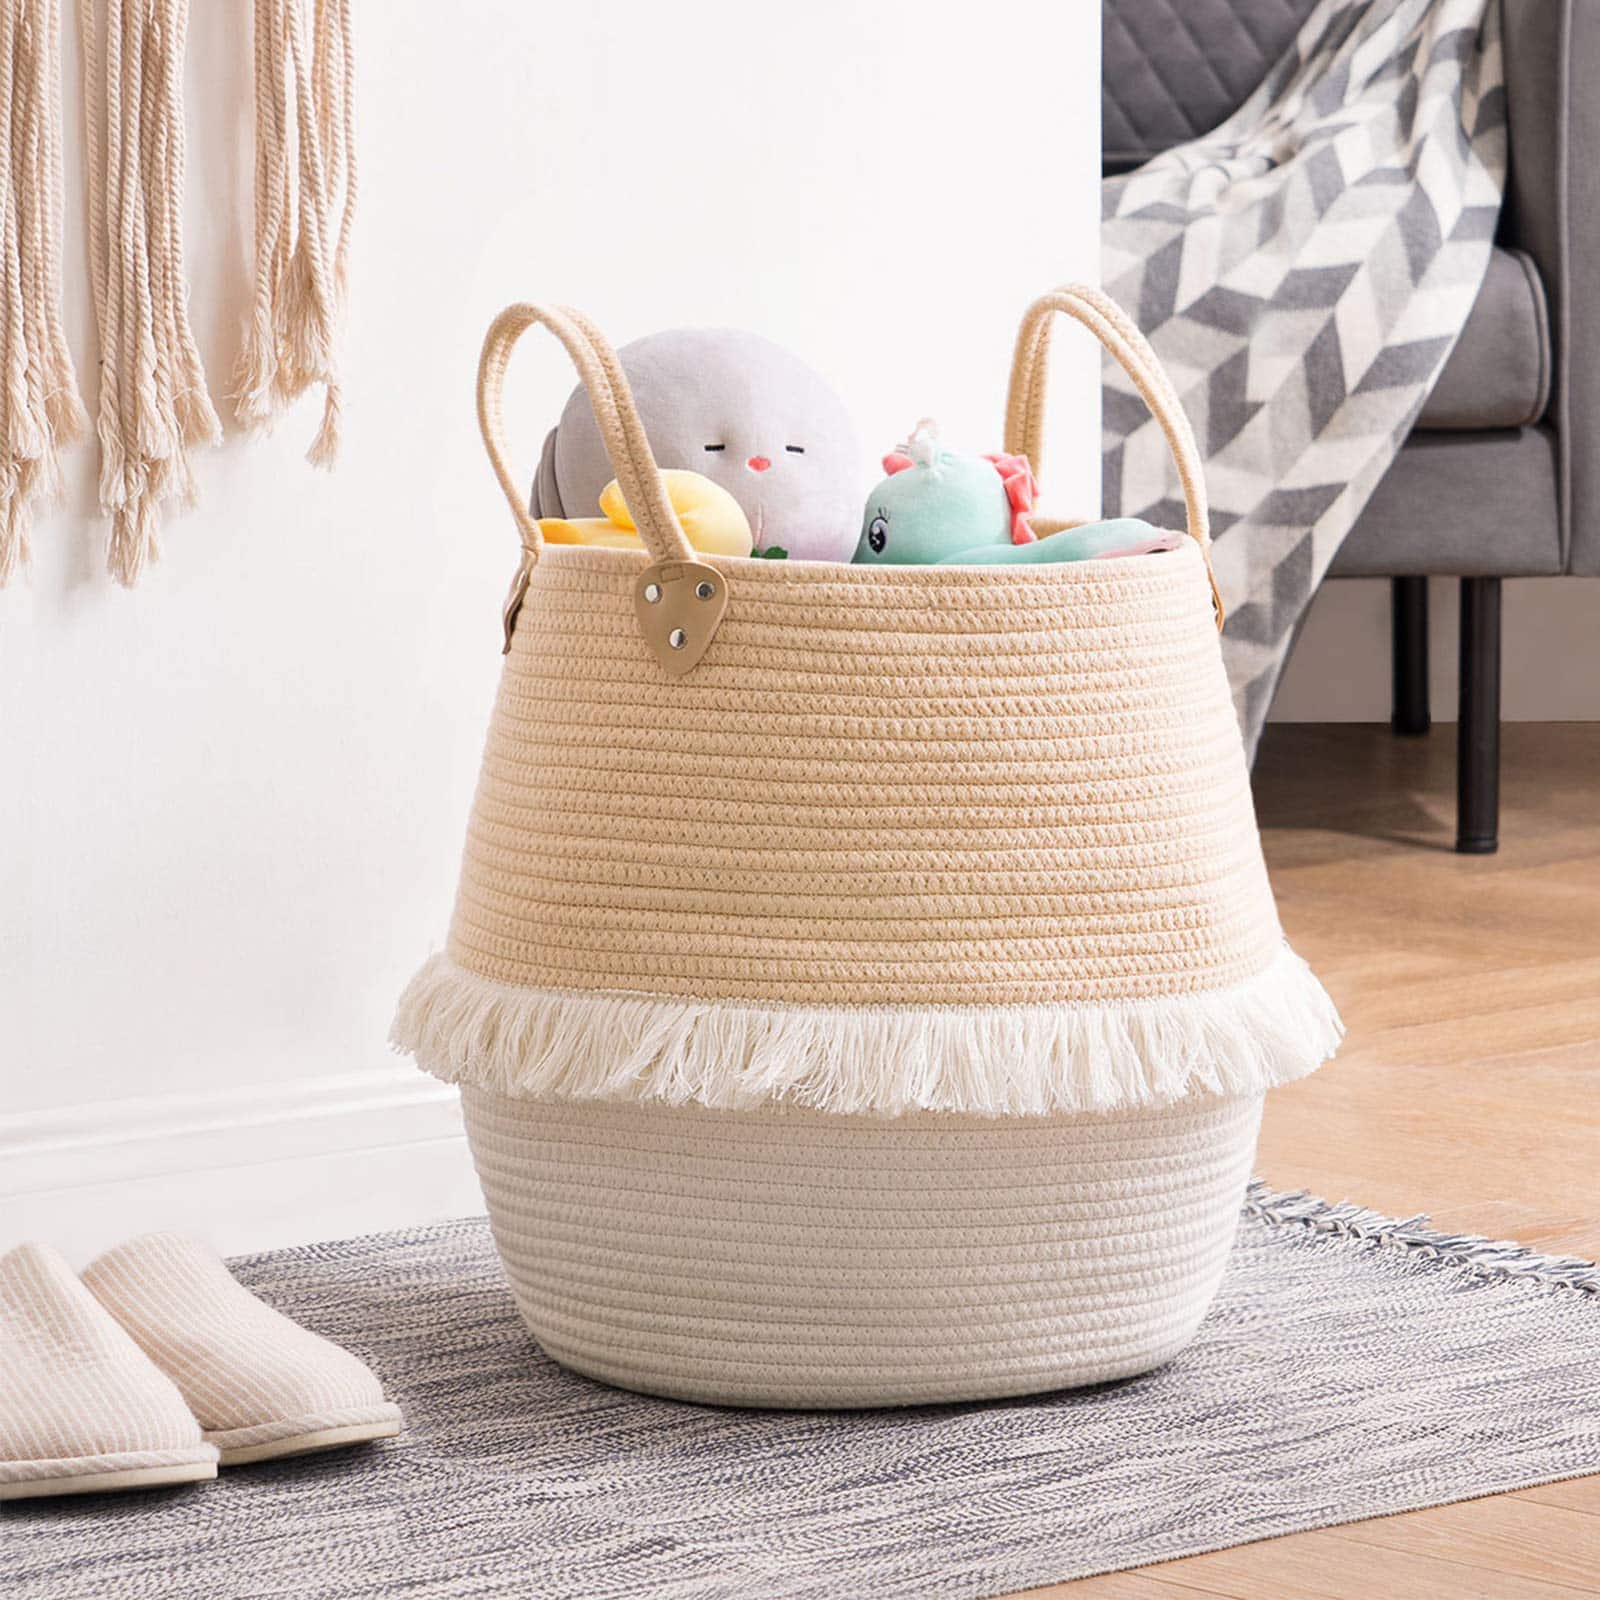 Laundry basket craft idea for girls